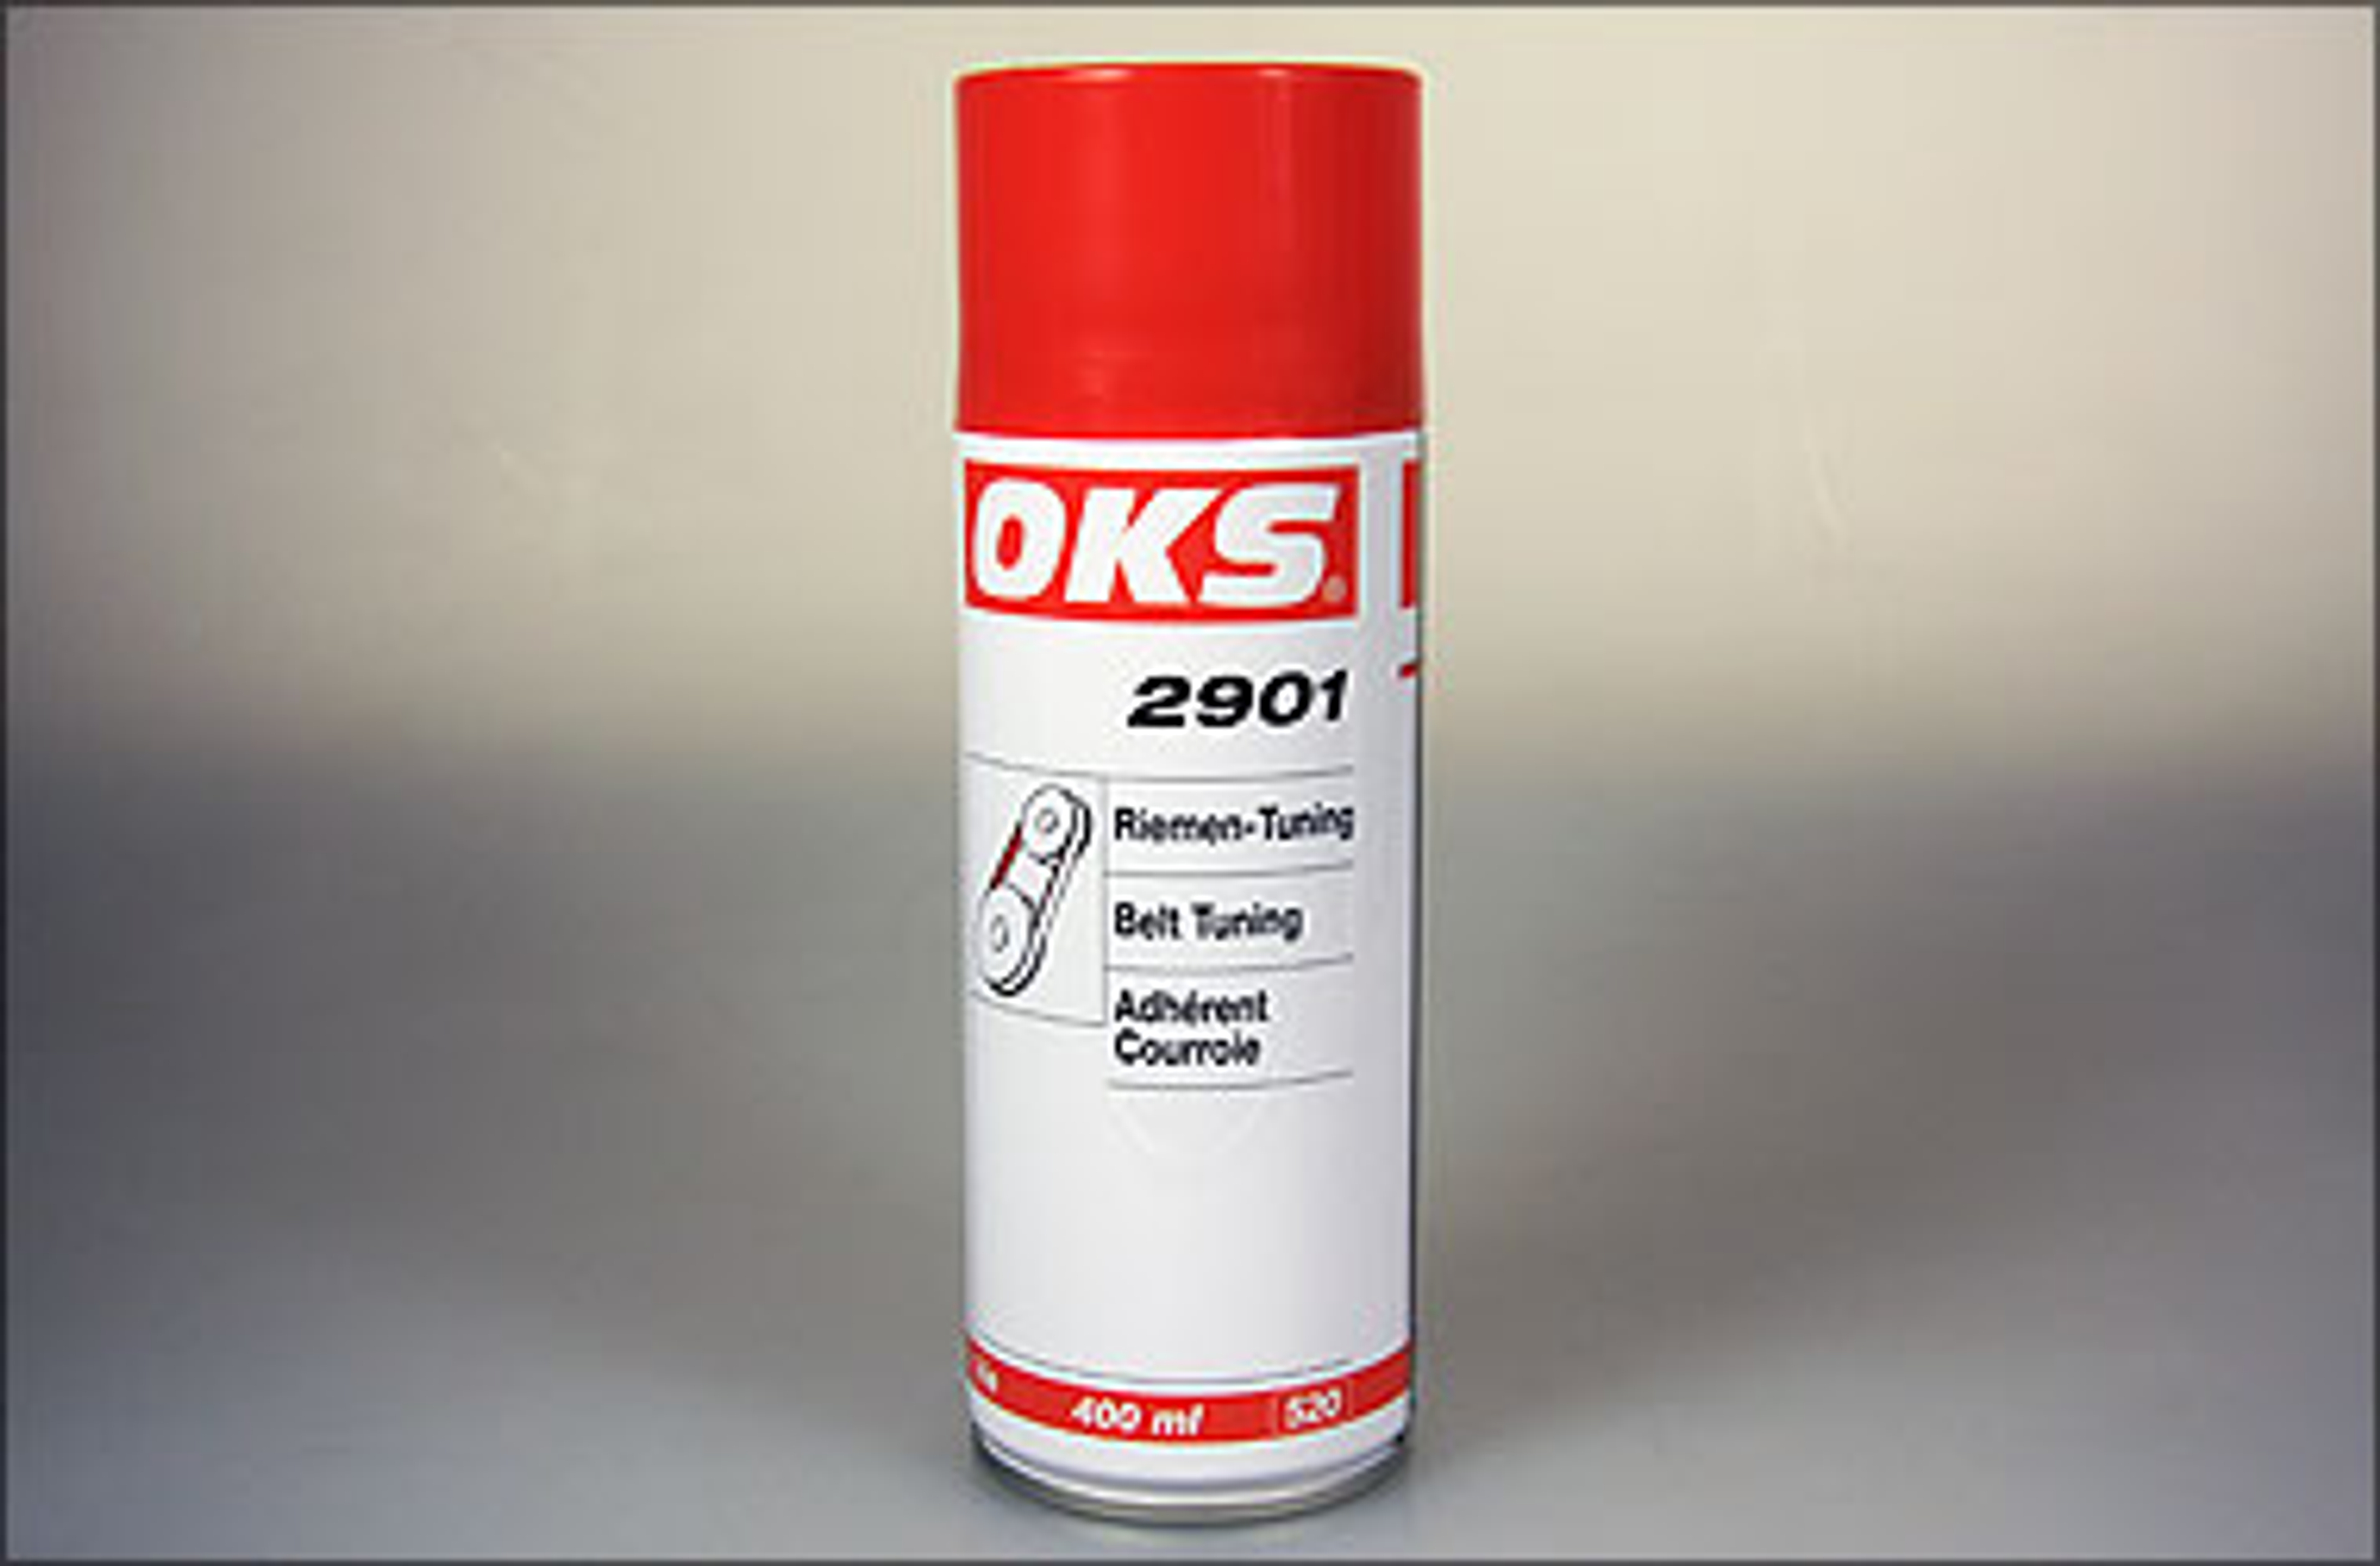 OKS 2901 Riementuning Sprühdose 400 ml, 1 St.